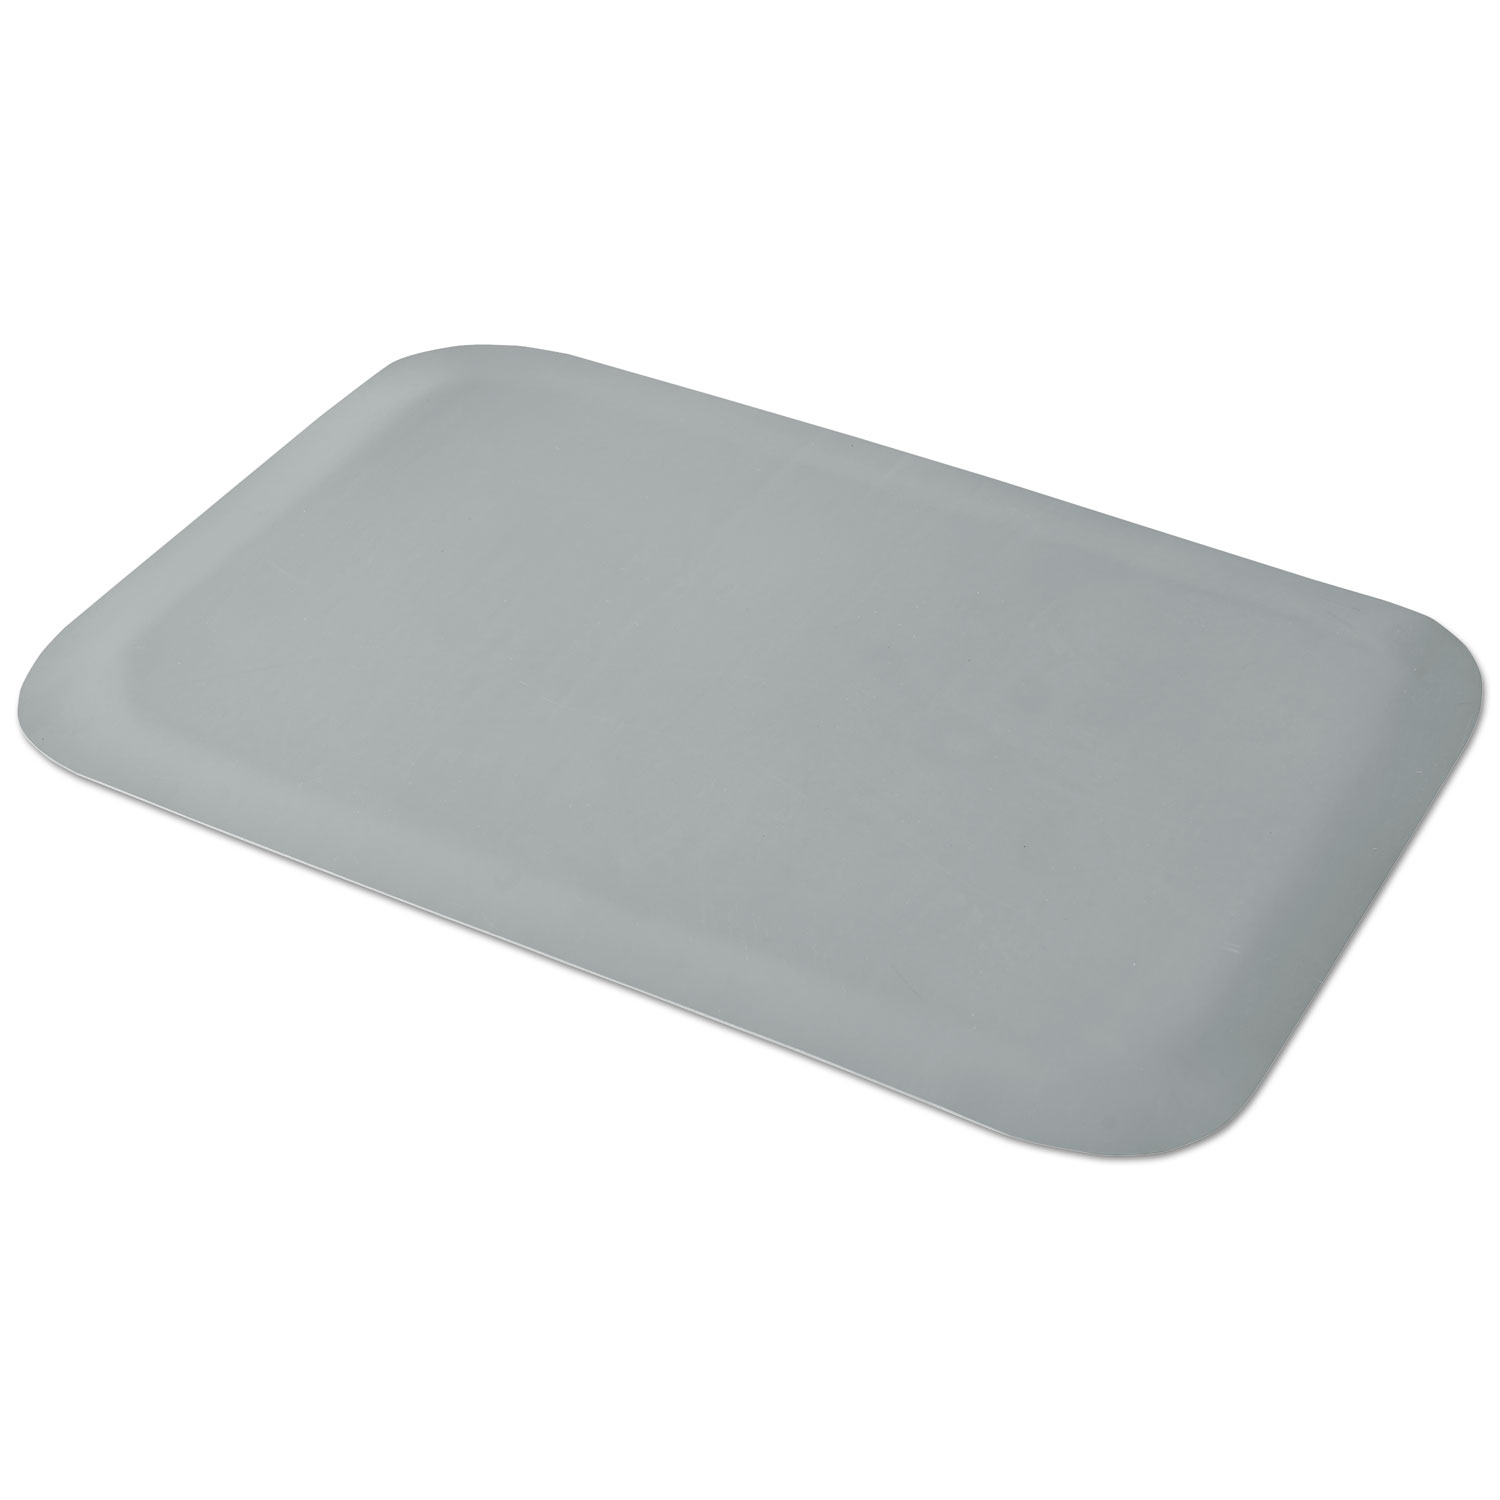  Guardian 44020350 Pro Top Anti-Fatigue Mat, PVC Foam/Solid PVC, 24 x 36, Gray (MLL44020350) 